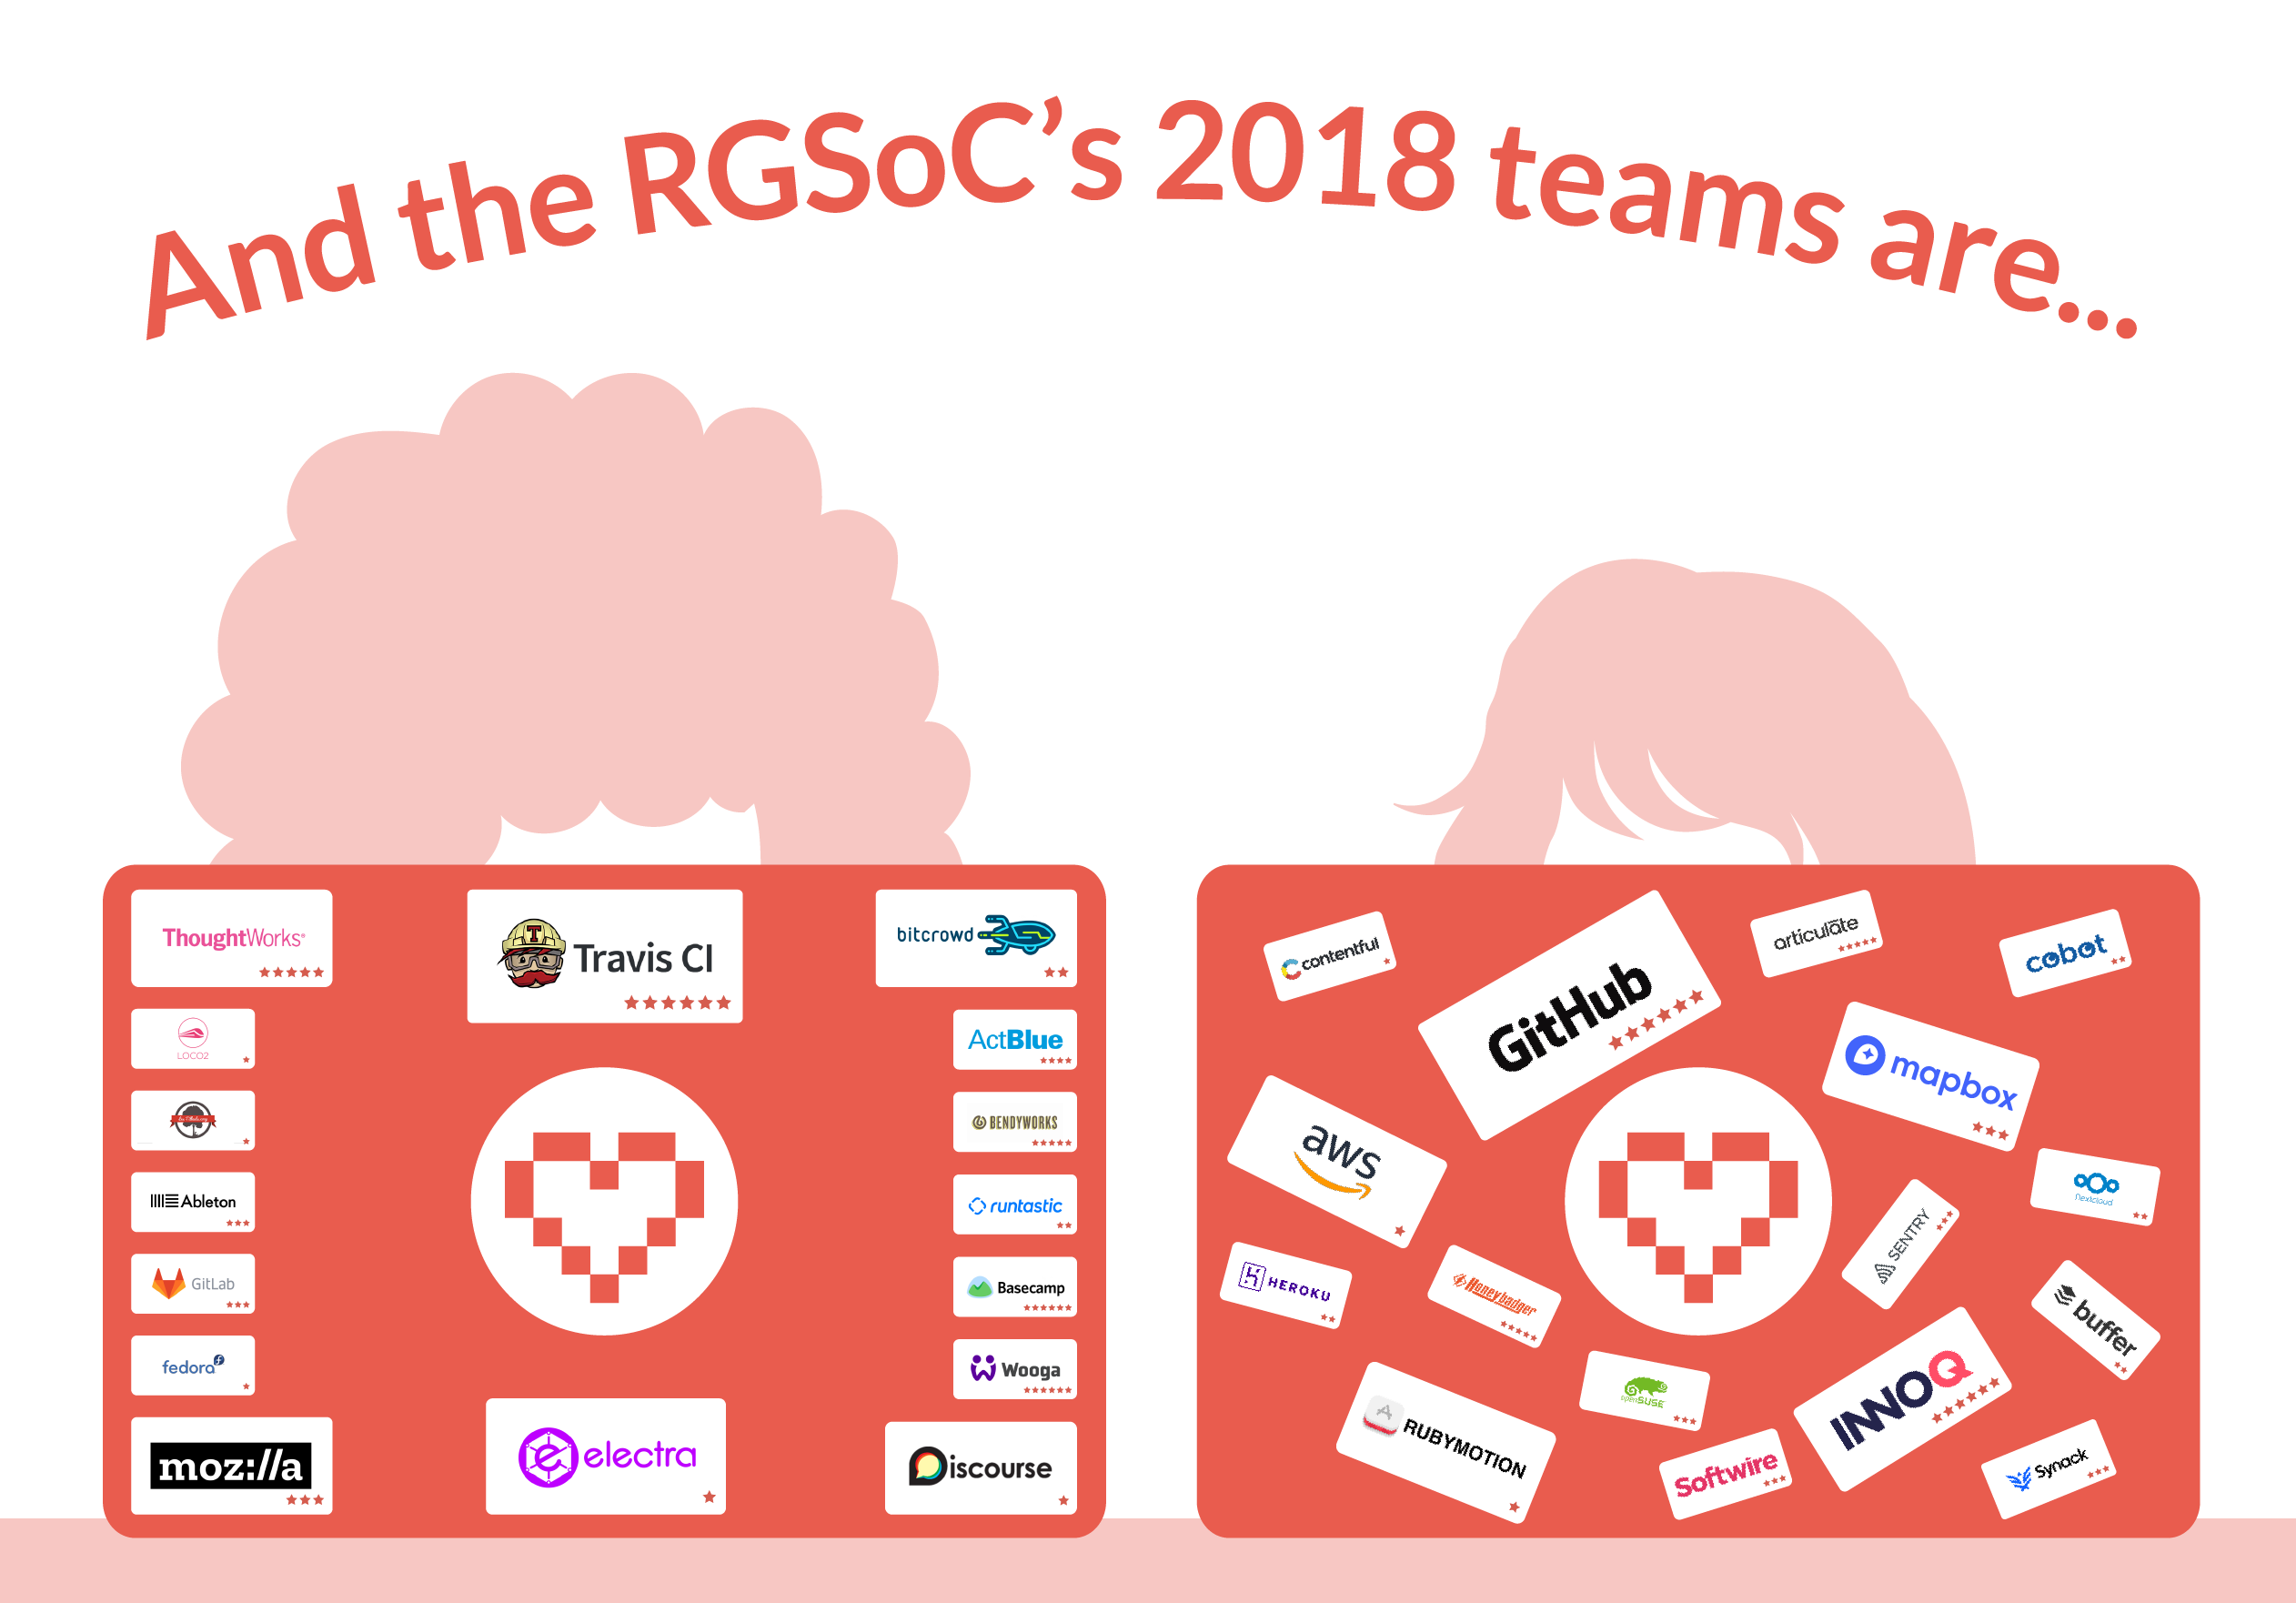 And the RGSoC's 2018 teams are... (illustration by Ana Sofia Pinho)